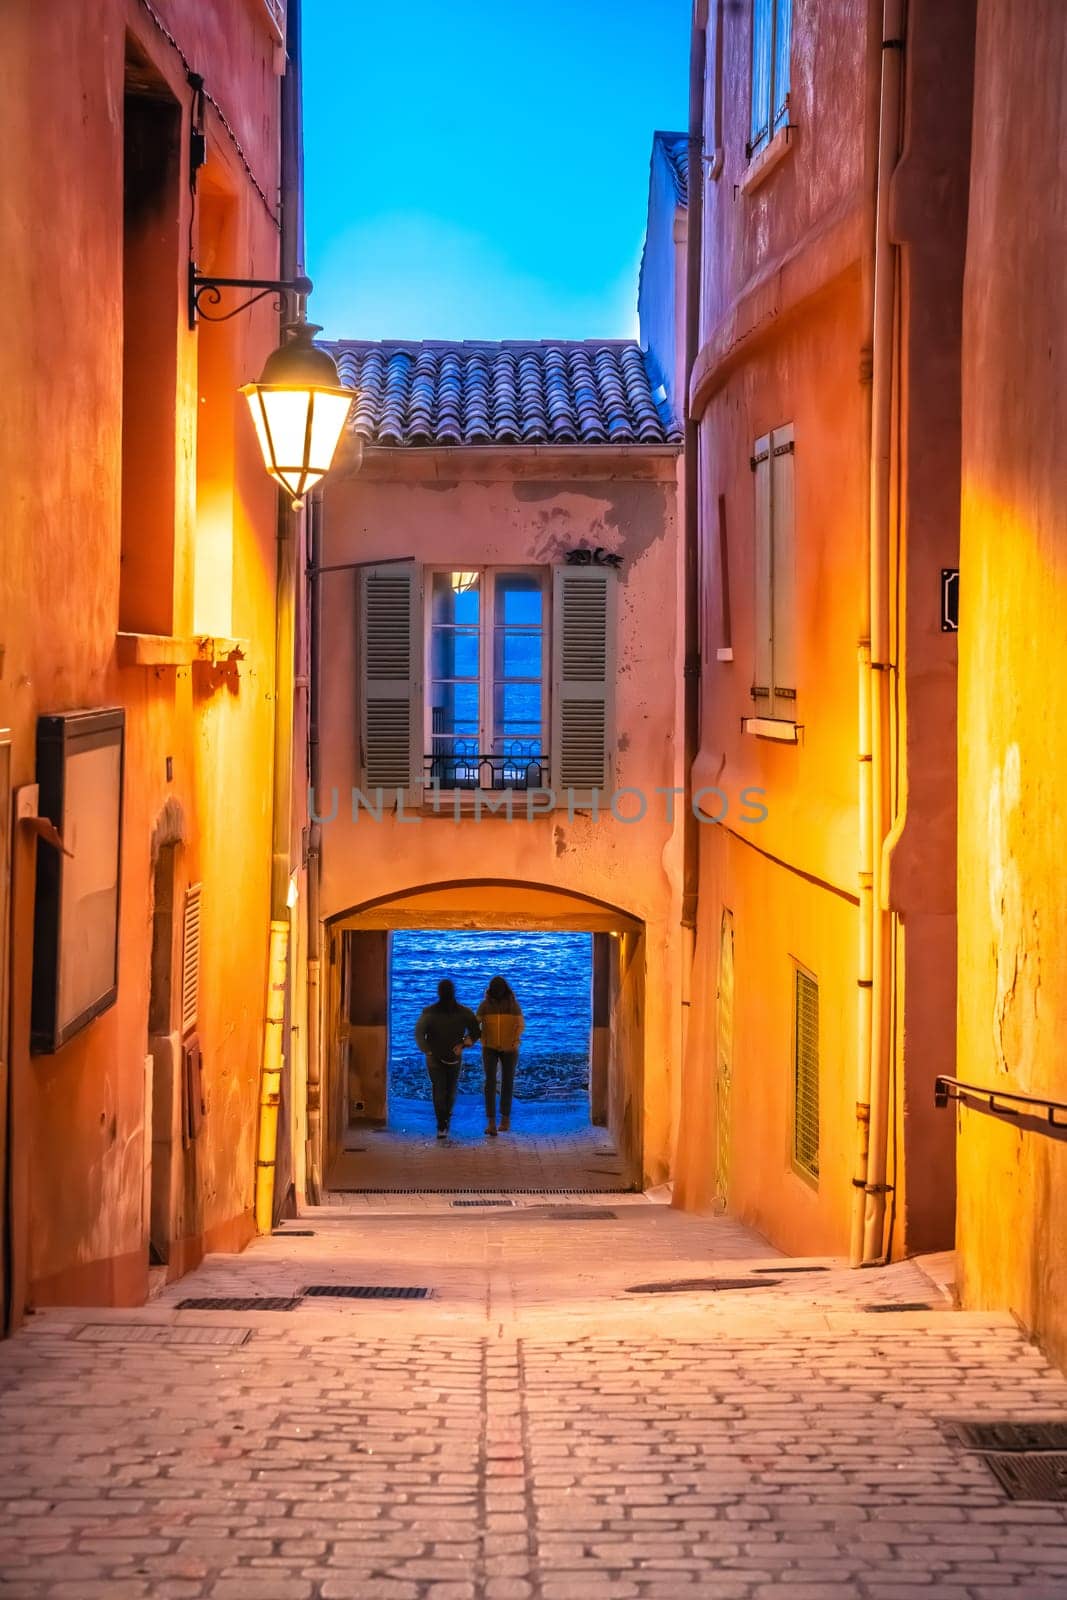 Saint Tropez stone alley with evening view, luxuty travel destination  by xbrchx